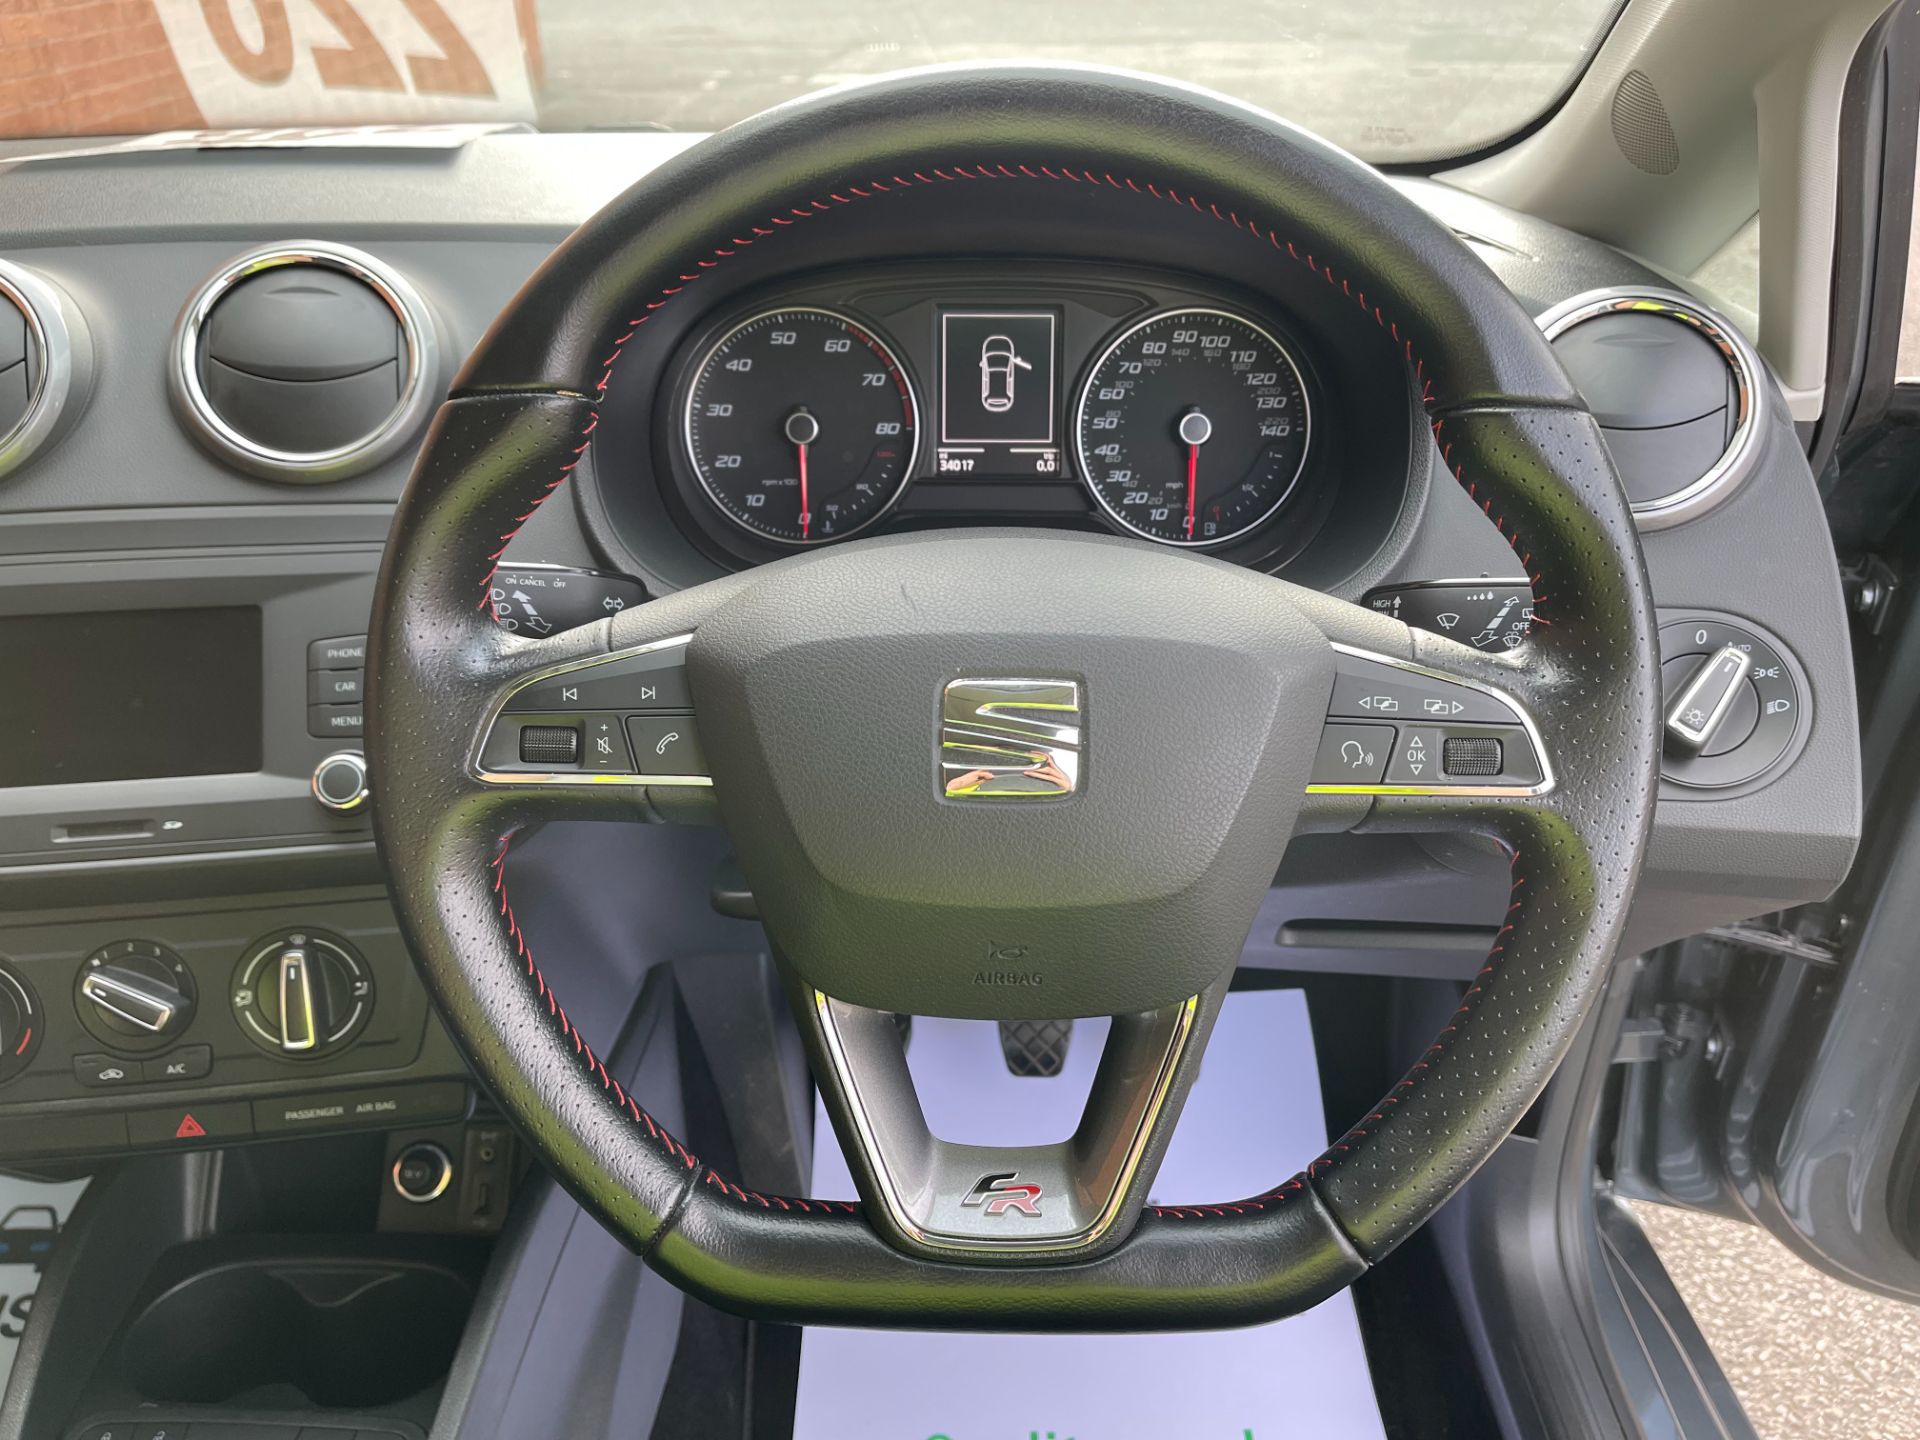 2016 Seat Ibiza 1.2 TSI 110 Fr 5Dr (YH16KZU) Thumbnail 21